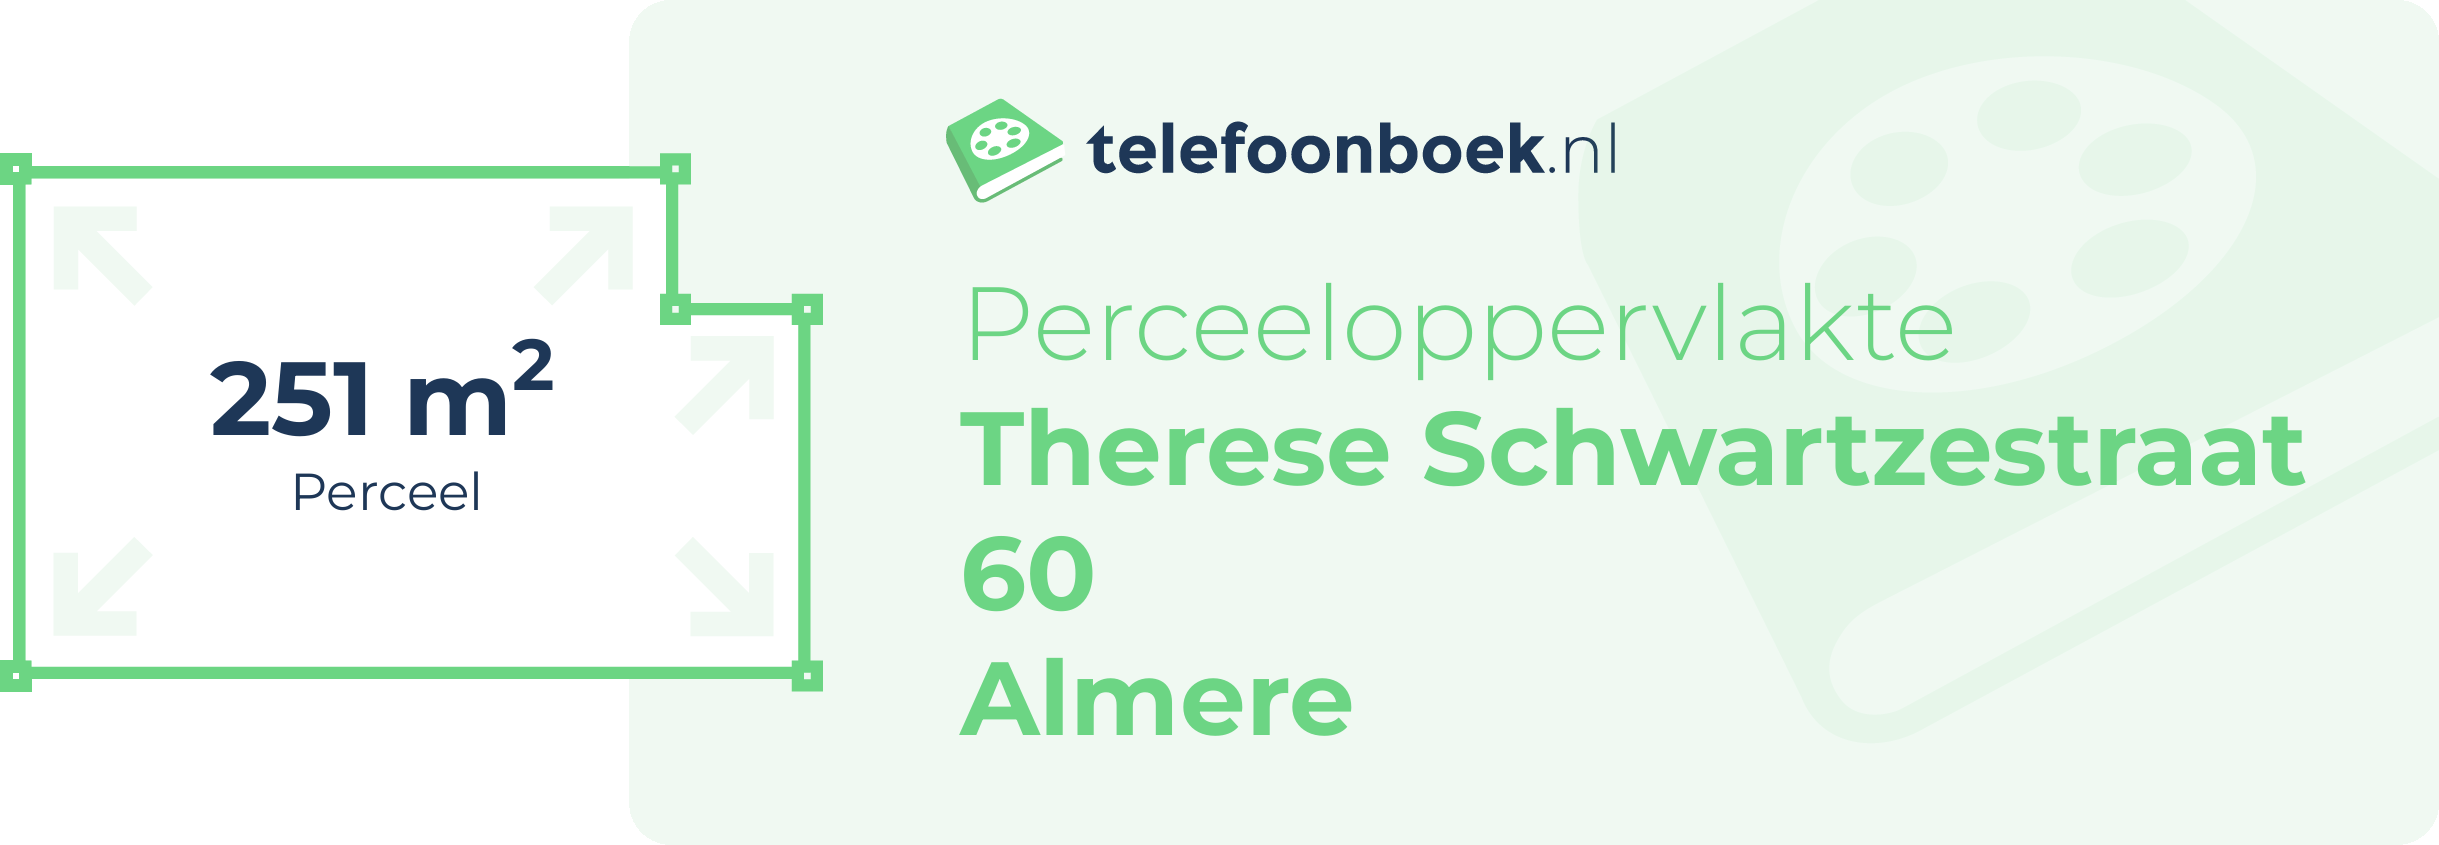 Perceeloppervlakte Therese Schwartzestraat 60 Almere